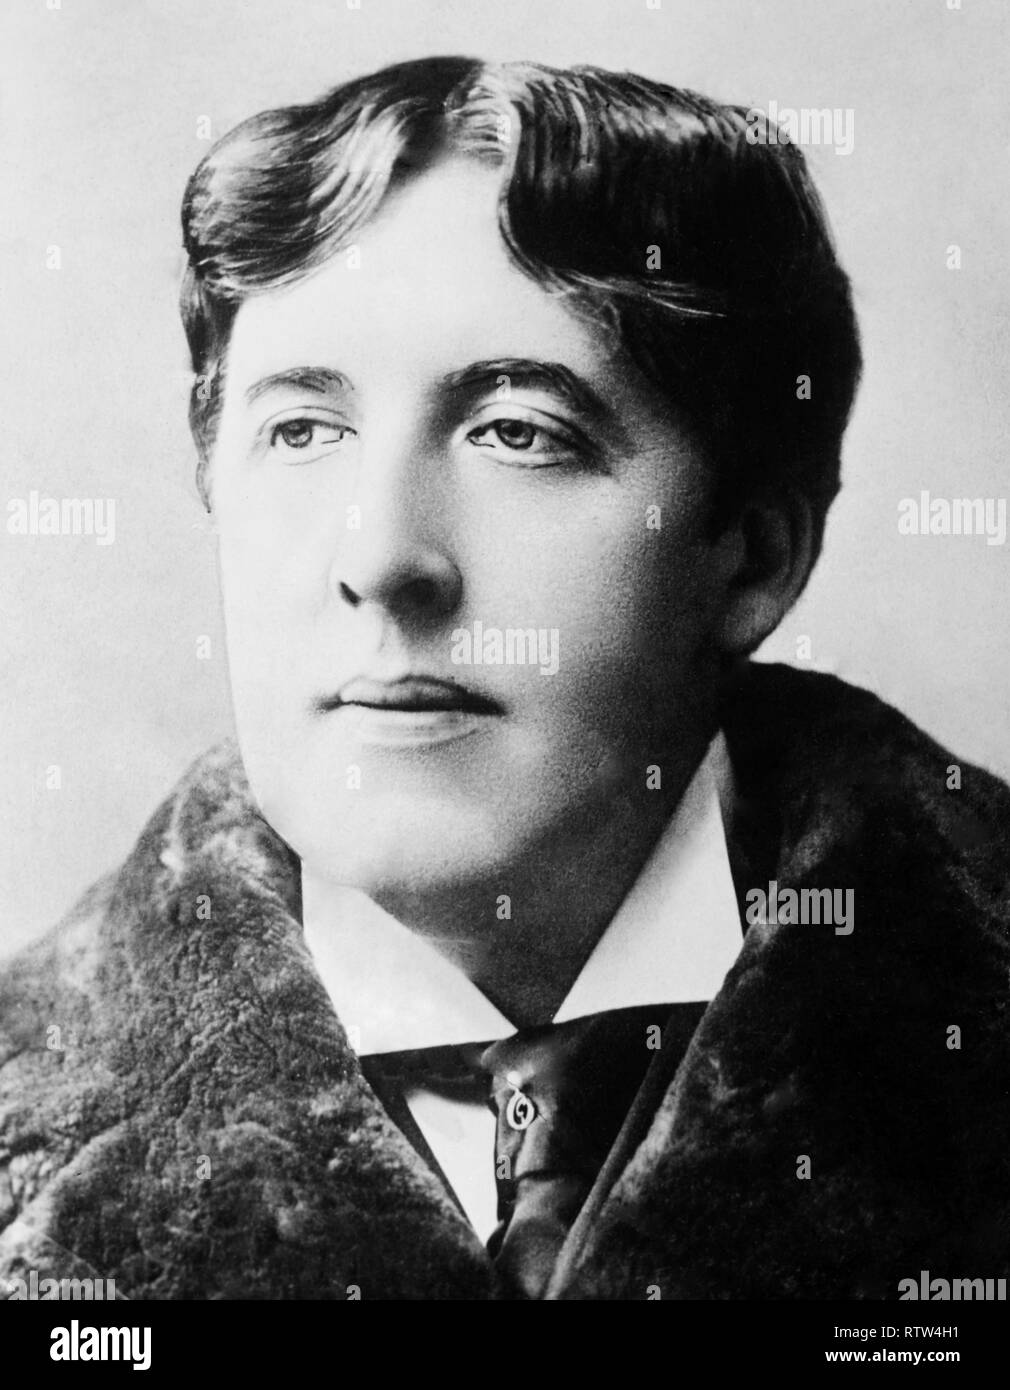 oscar wilde irish playwright circa 1900 Stock Photo